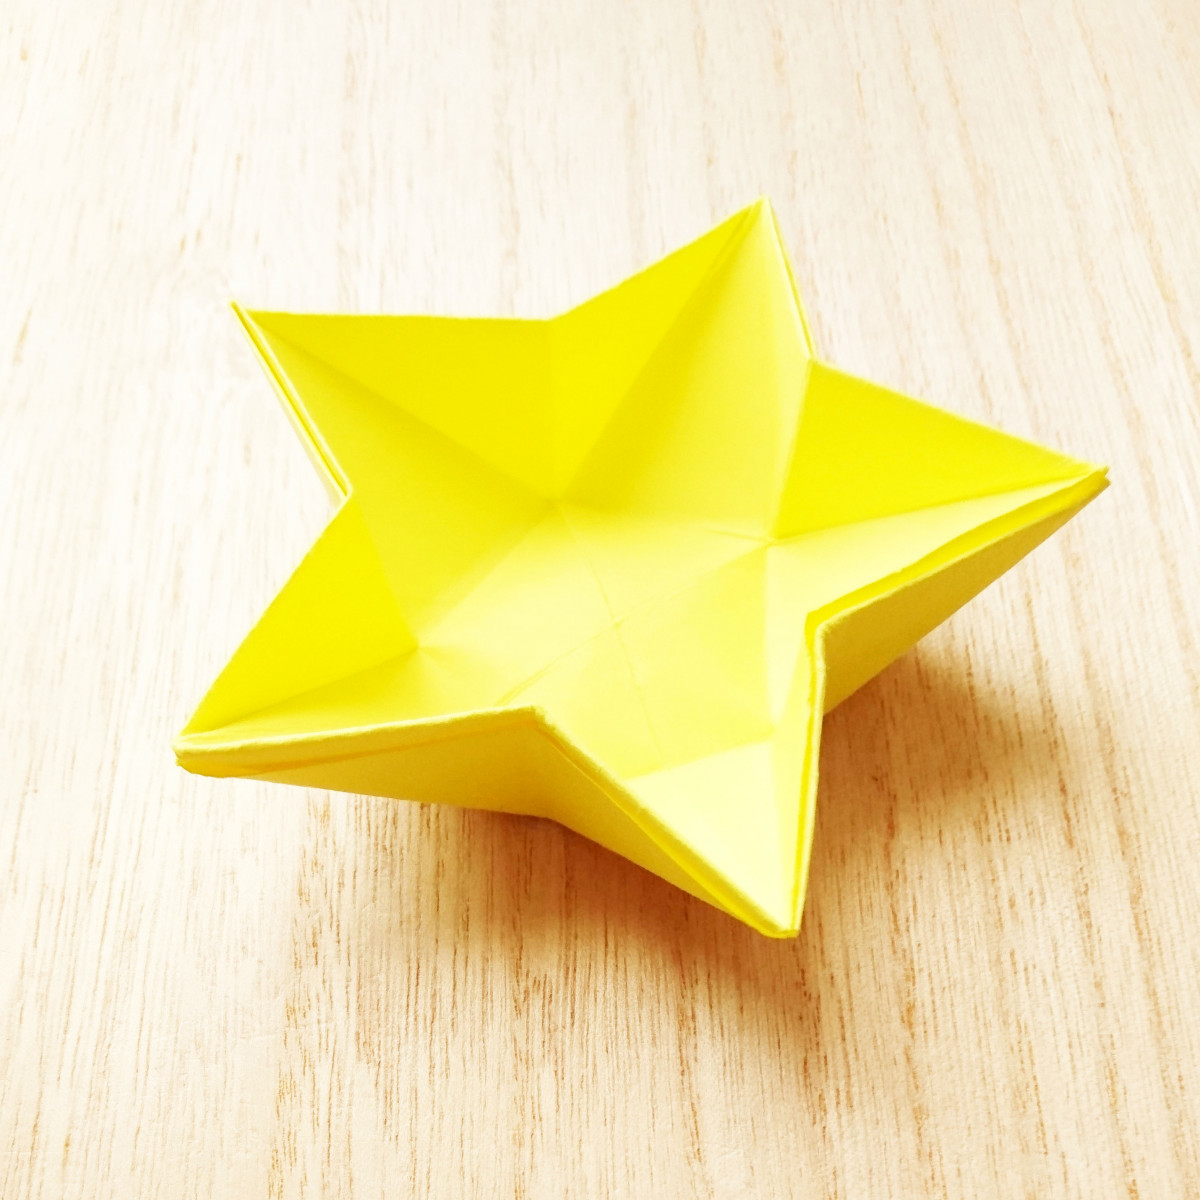 [B! 工作] 工作アイデア⑥折り紙で作る、立体的な「お星様」 - なる子とマーナル☆